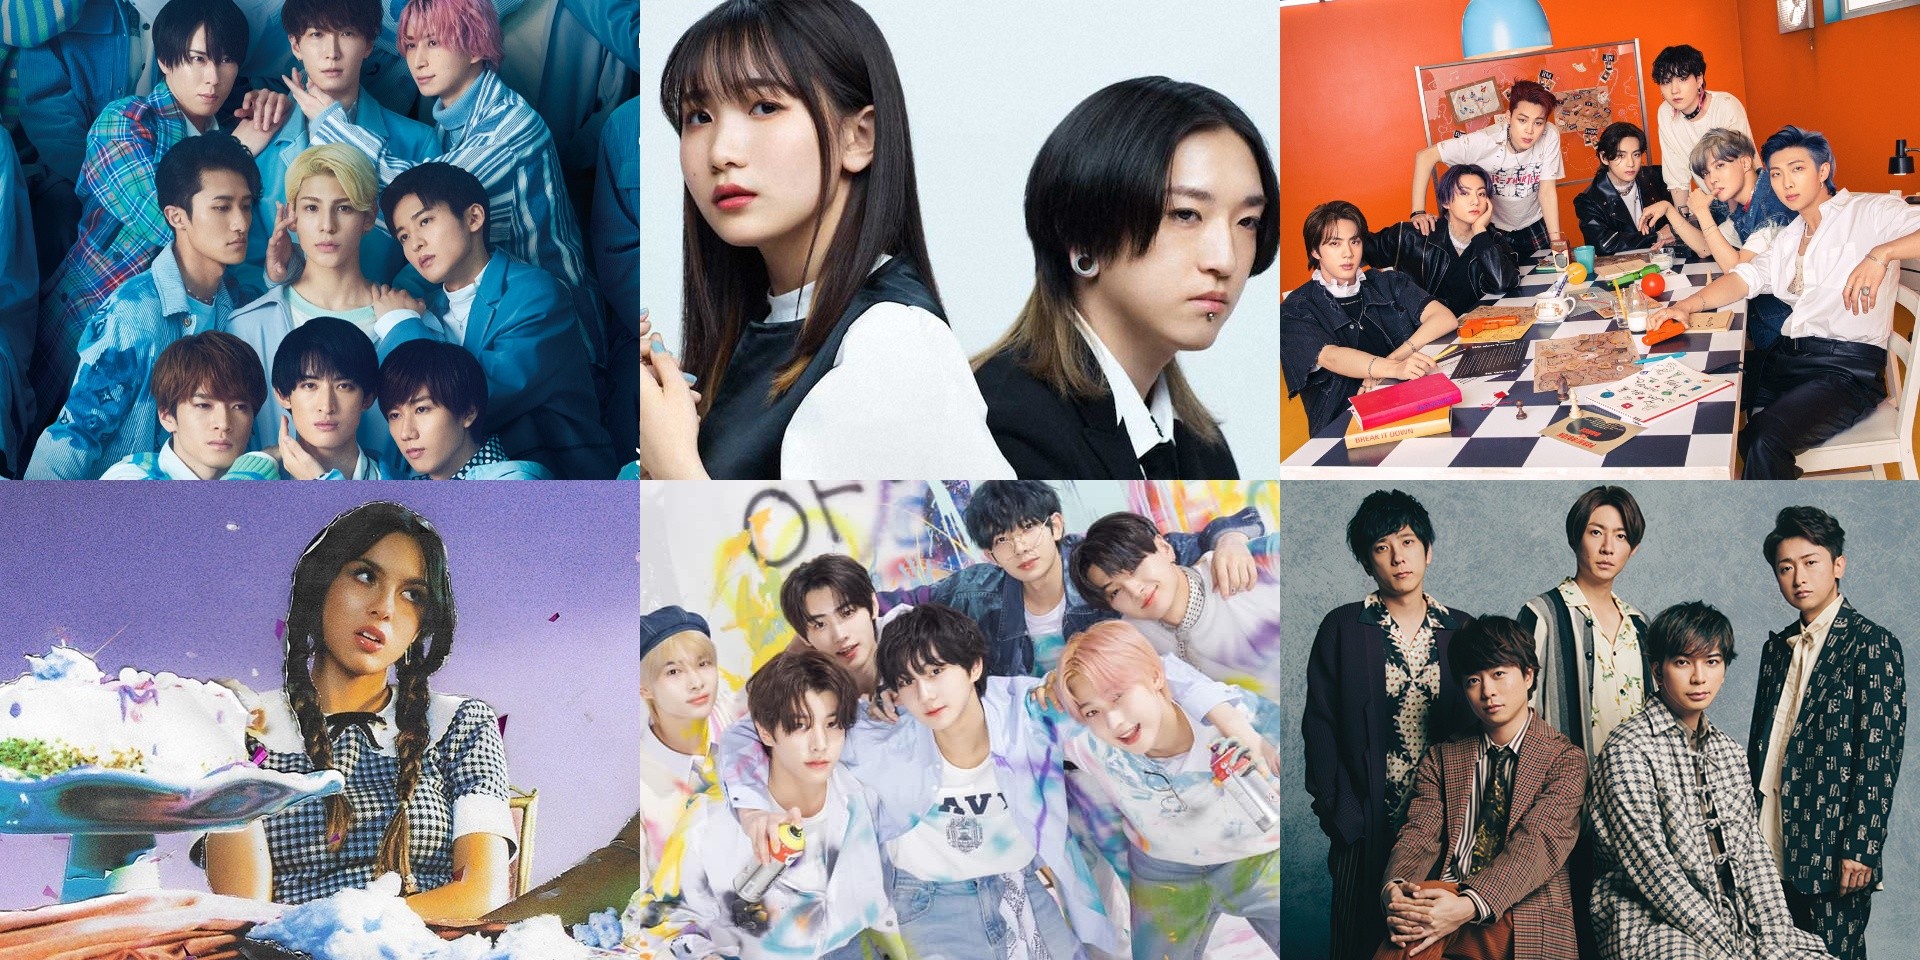 Here are the winners of the 36th Japan Gold Disc Awards – Snow Man, YOASOBI, BTS, Olivia Rodrigo, ARASHI, ENHYPEN, and more